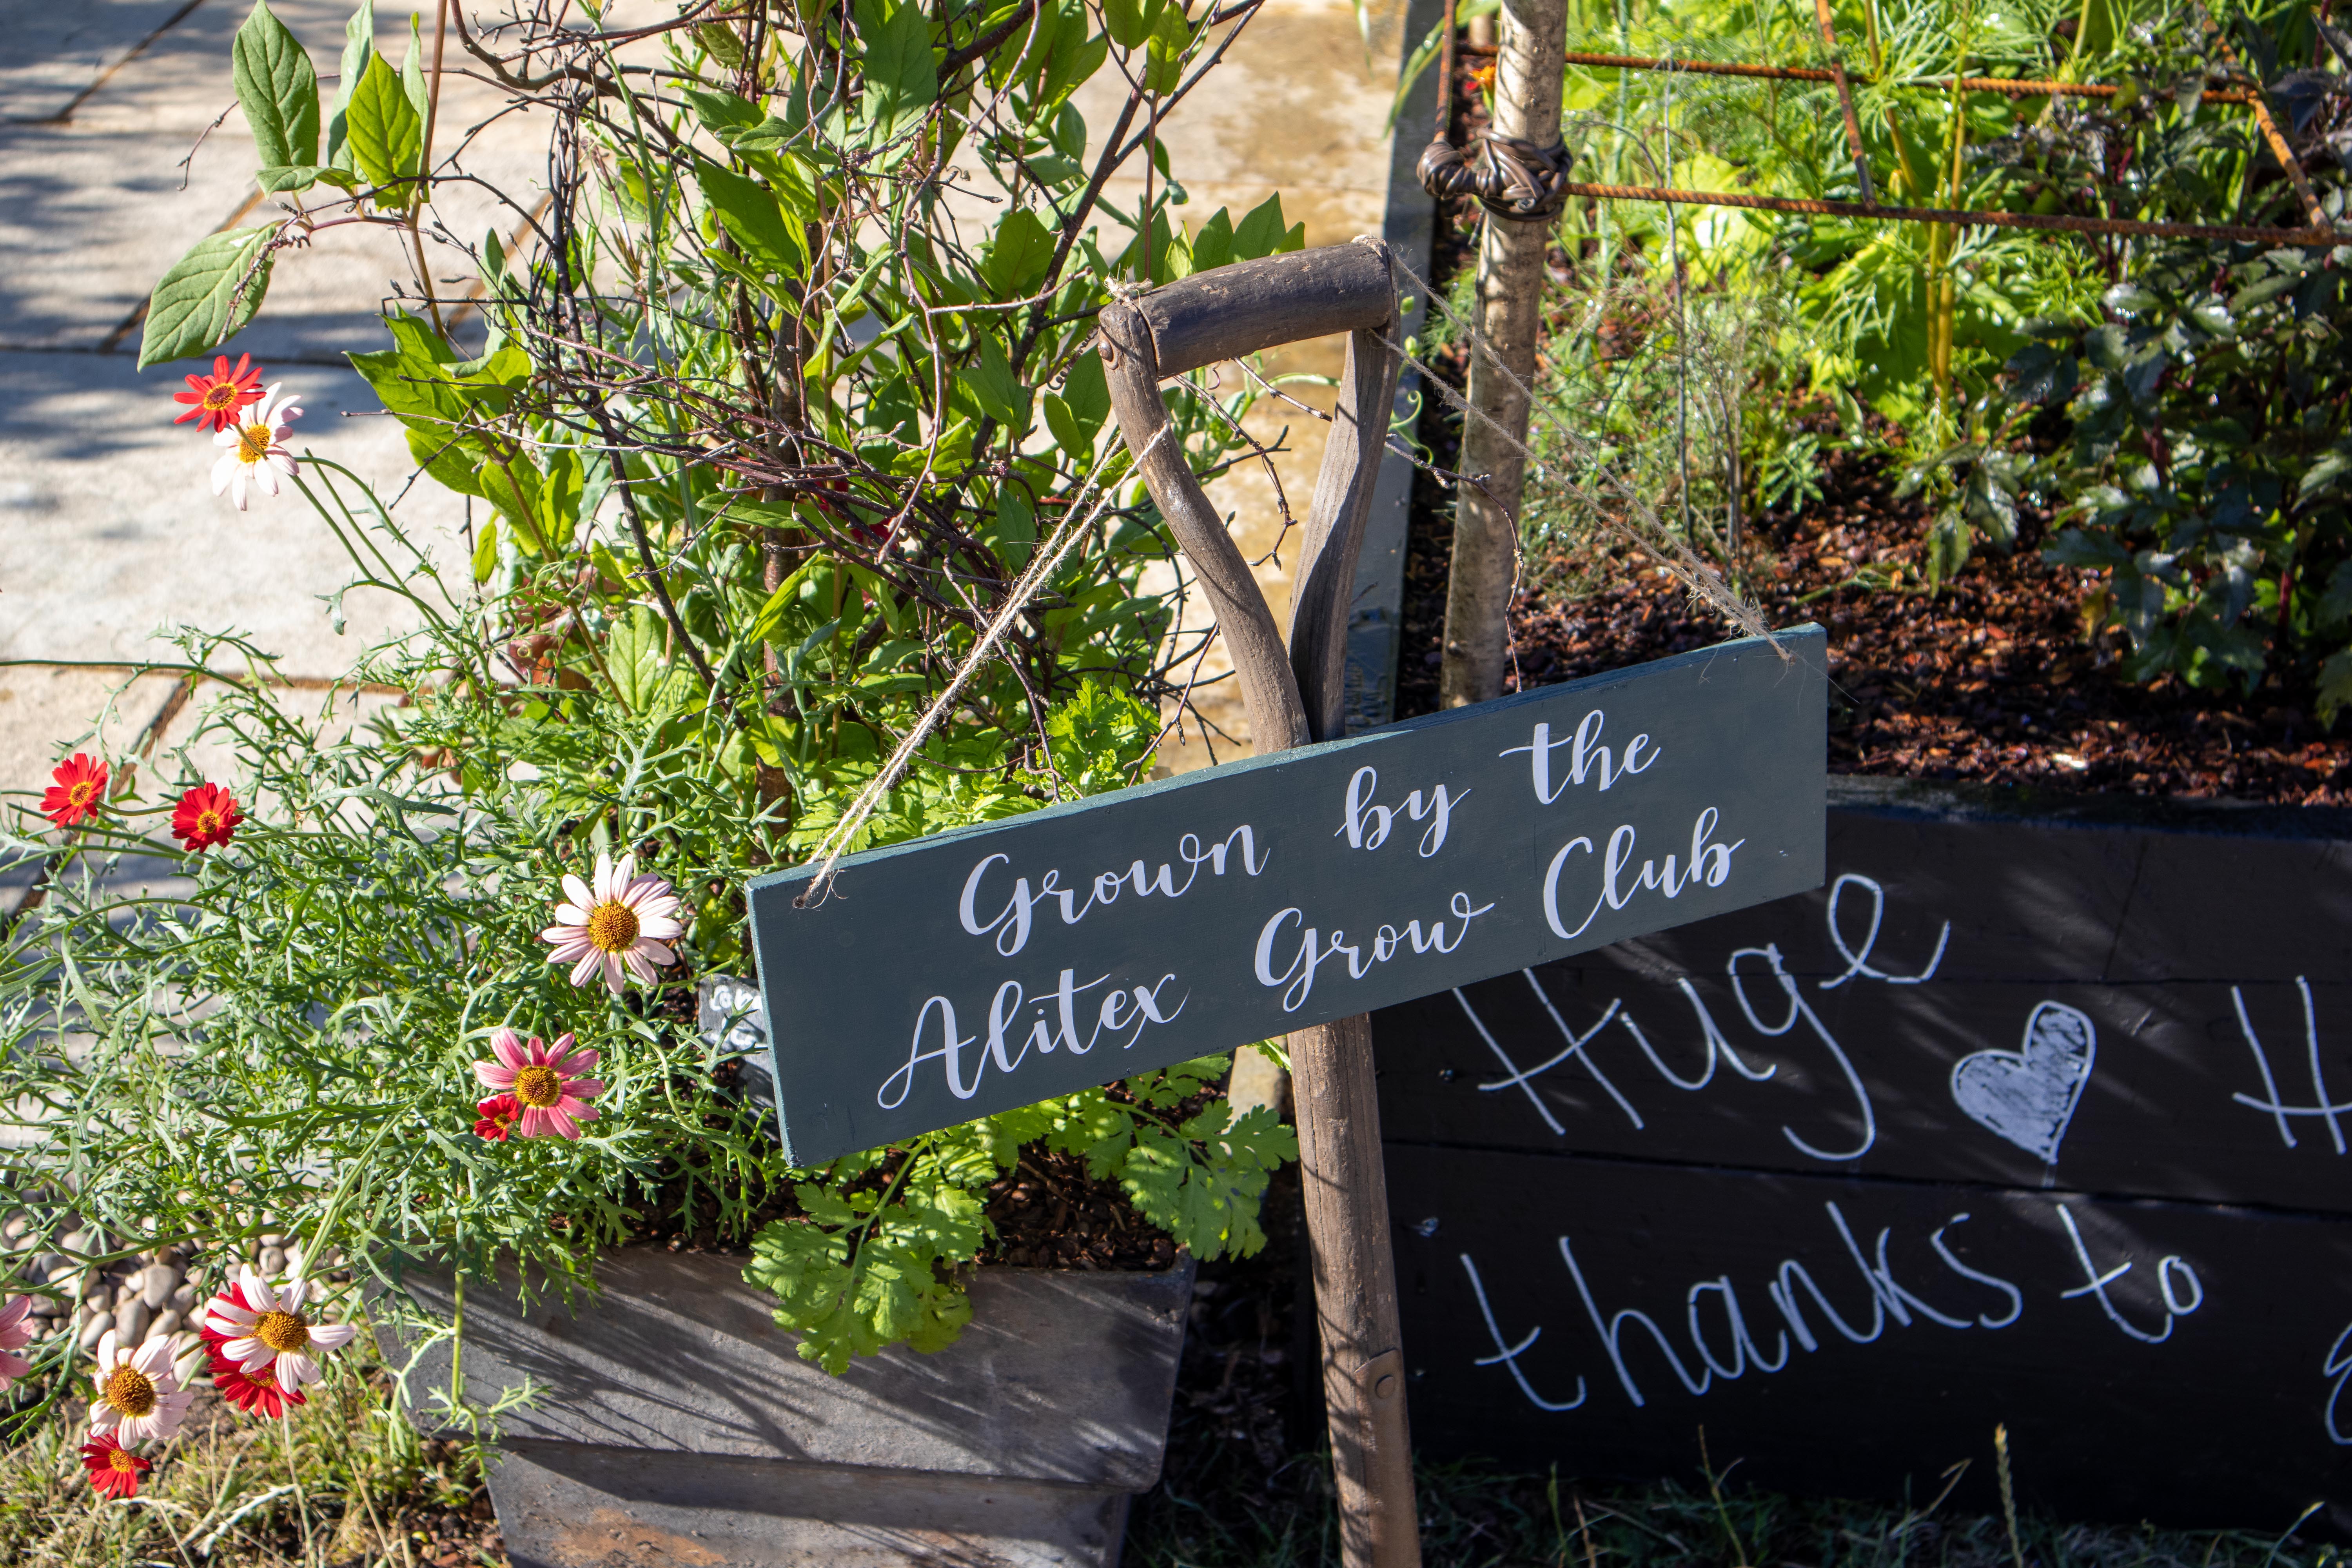 The Hampton Court cutting garden grown by The Alitex Grow Club